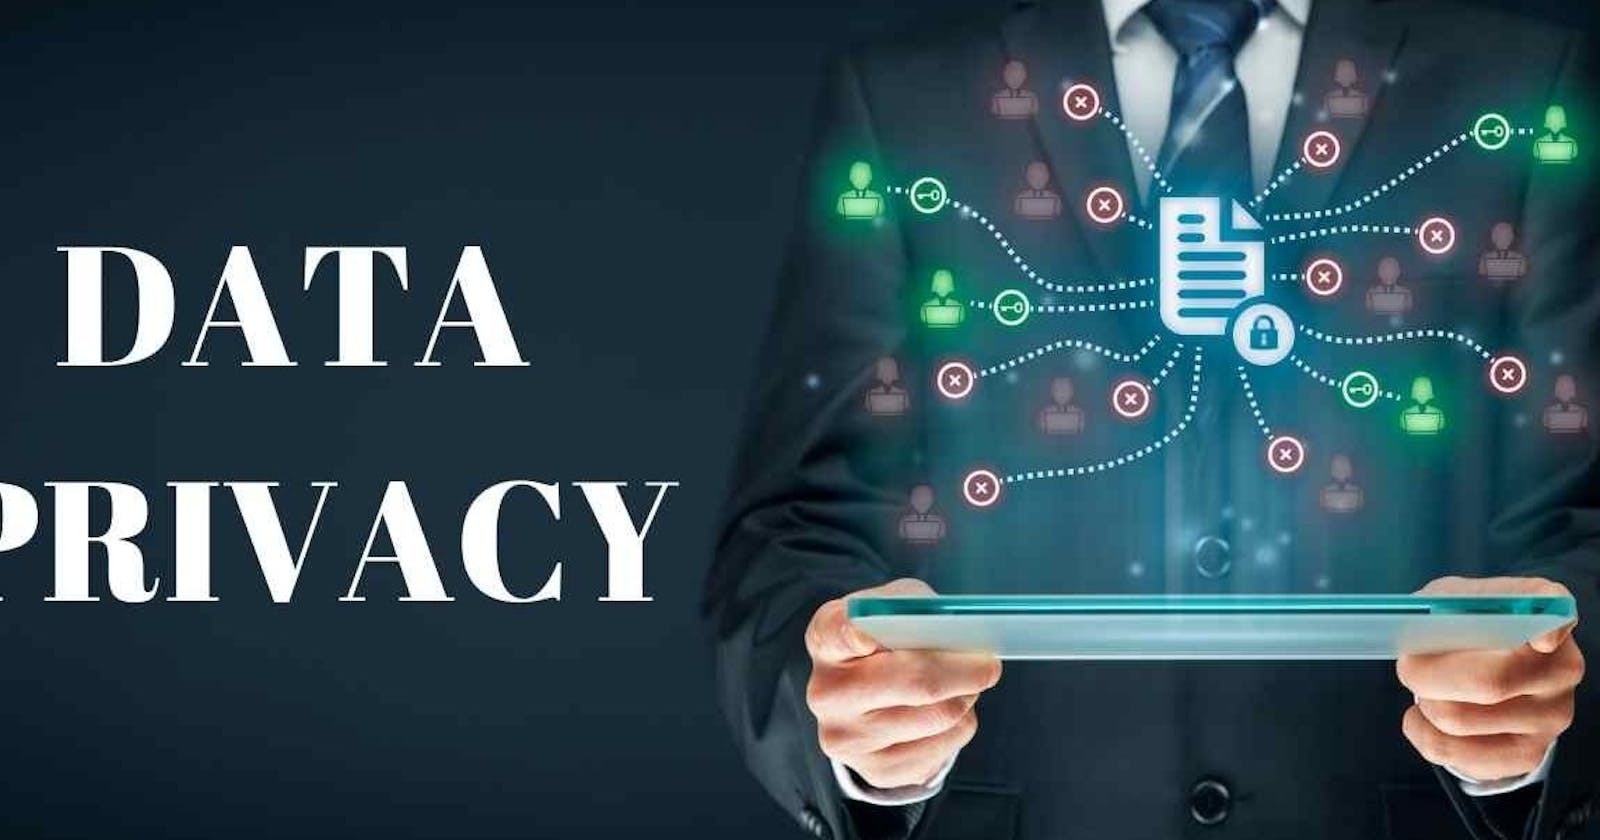 Data privacy ! A Concern